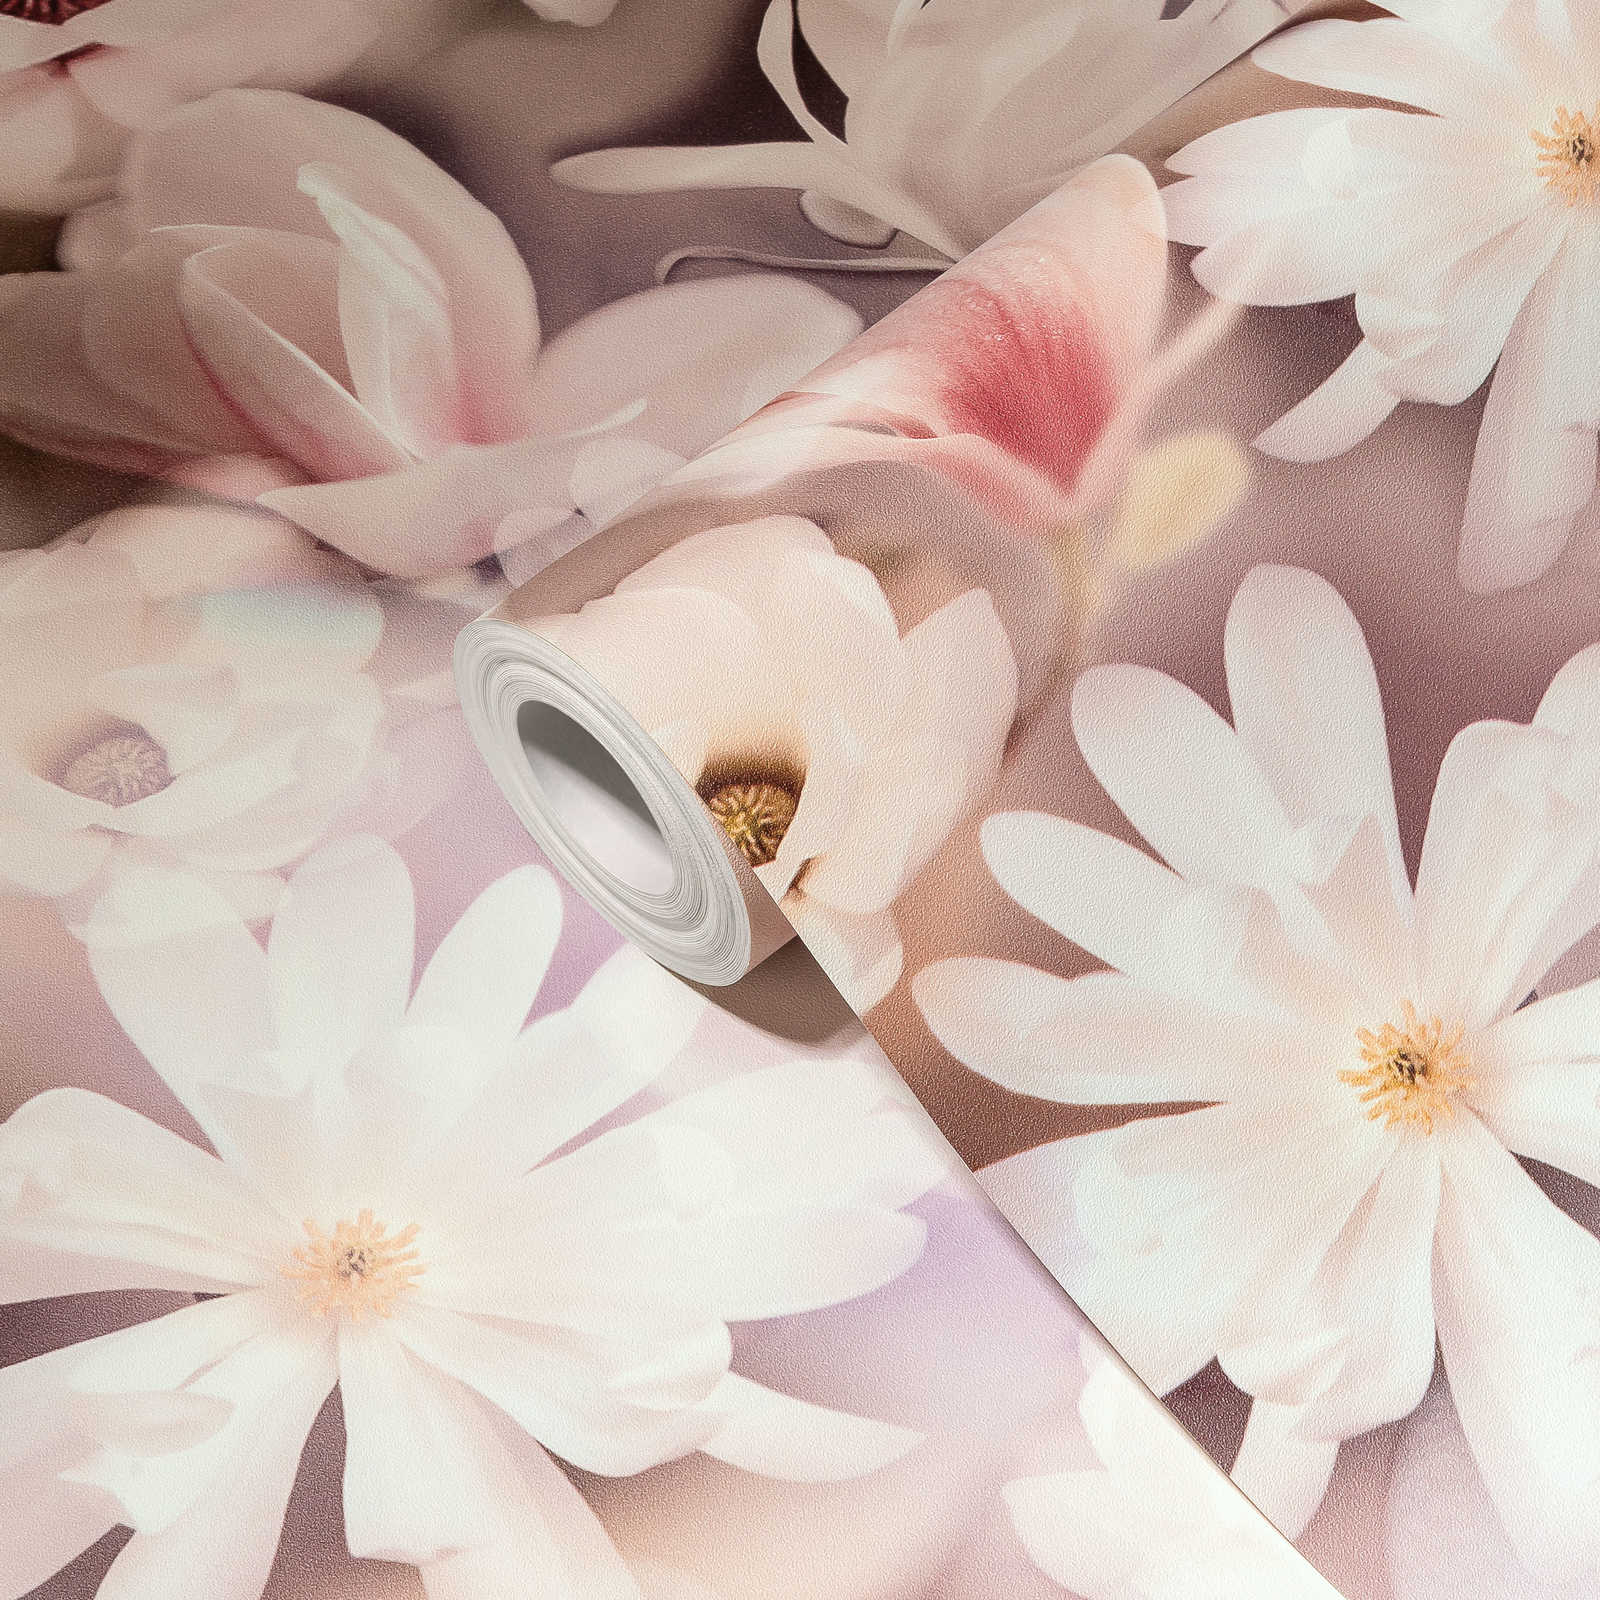             Bloemencollage ontwerp in roze en wit
        